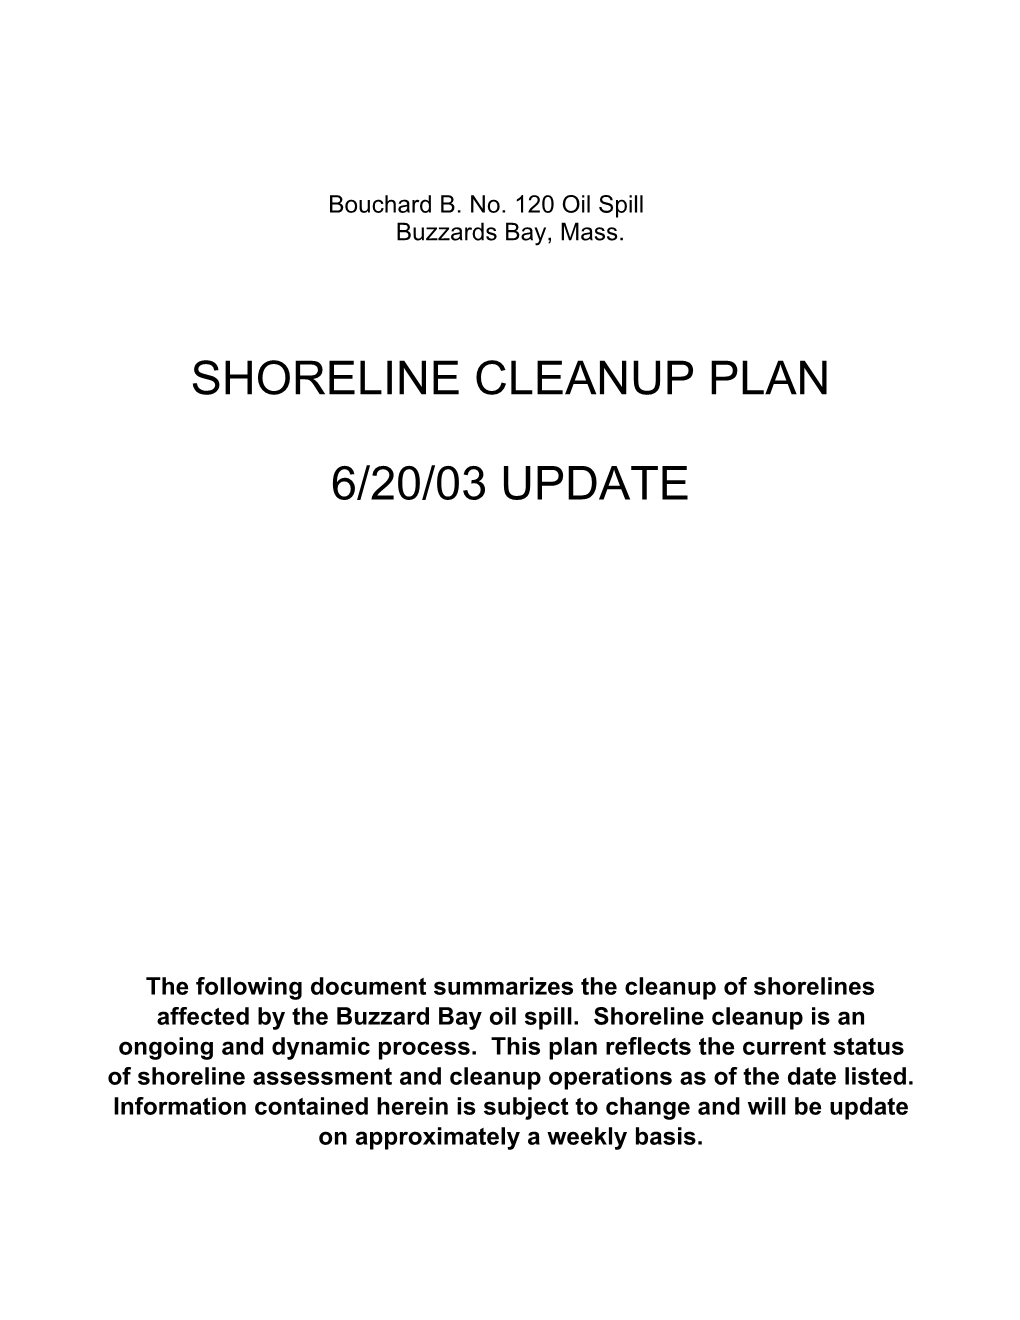 Shoreline Cleanup Plan 6/20/03 Update